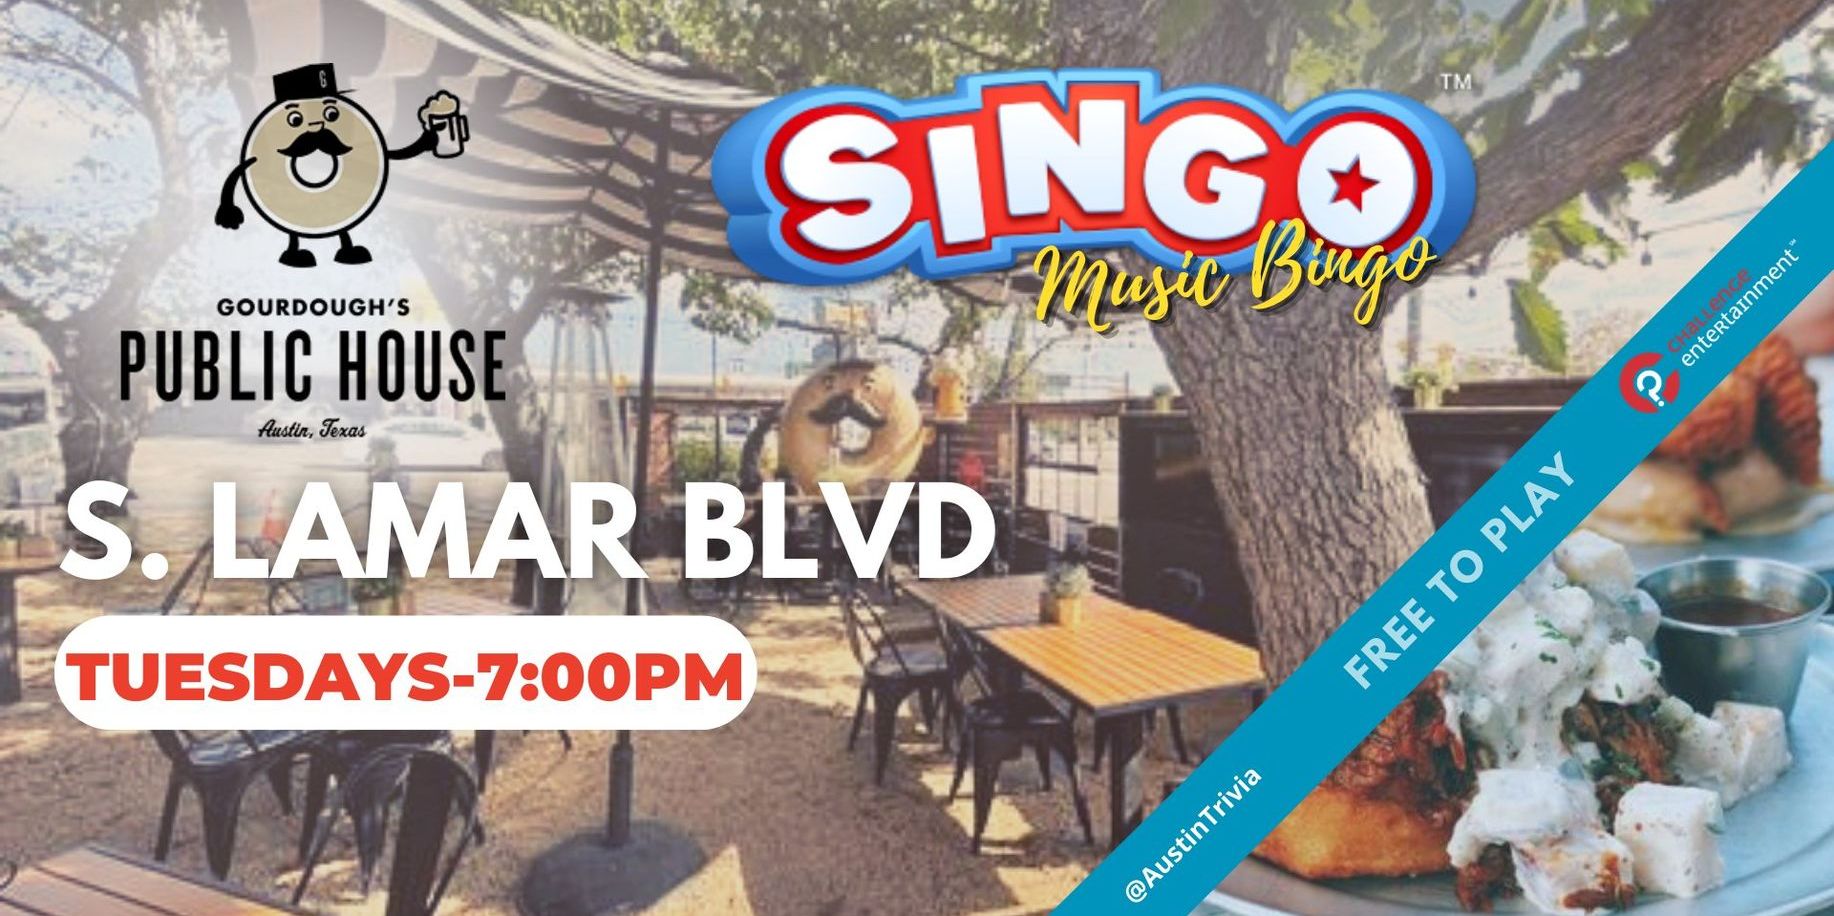 Singo Music Bingo at Gourdough's Public House promotional image